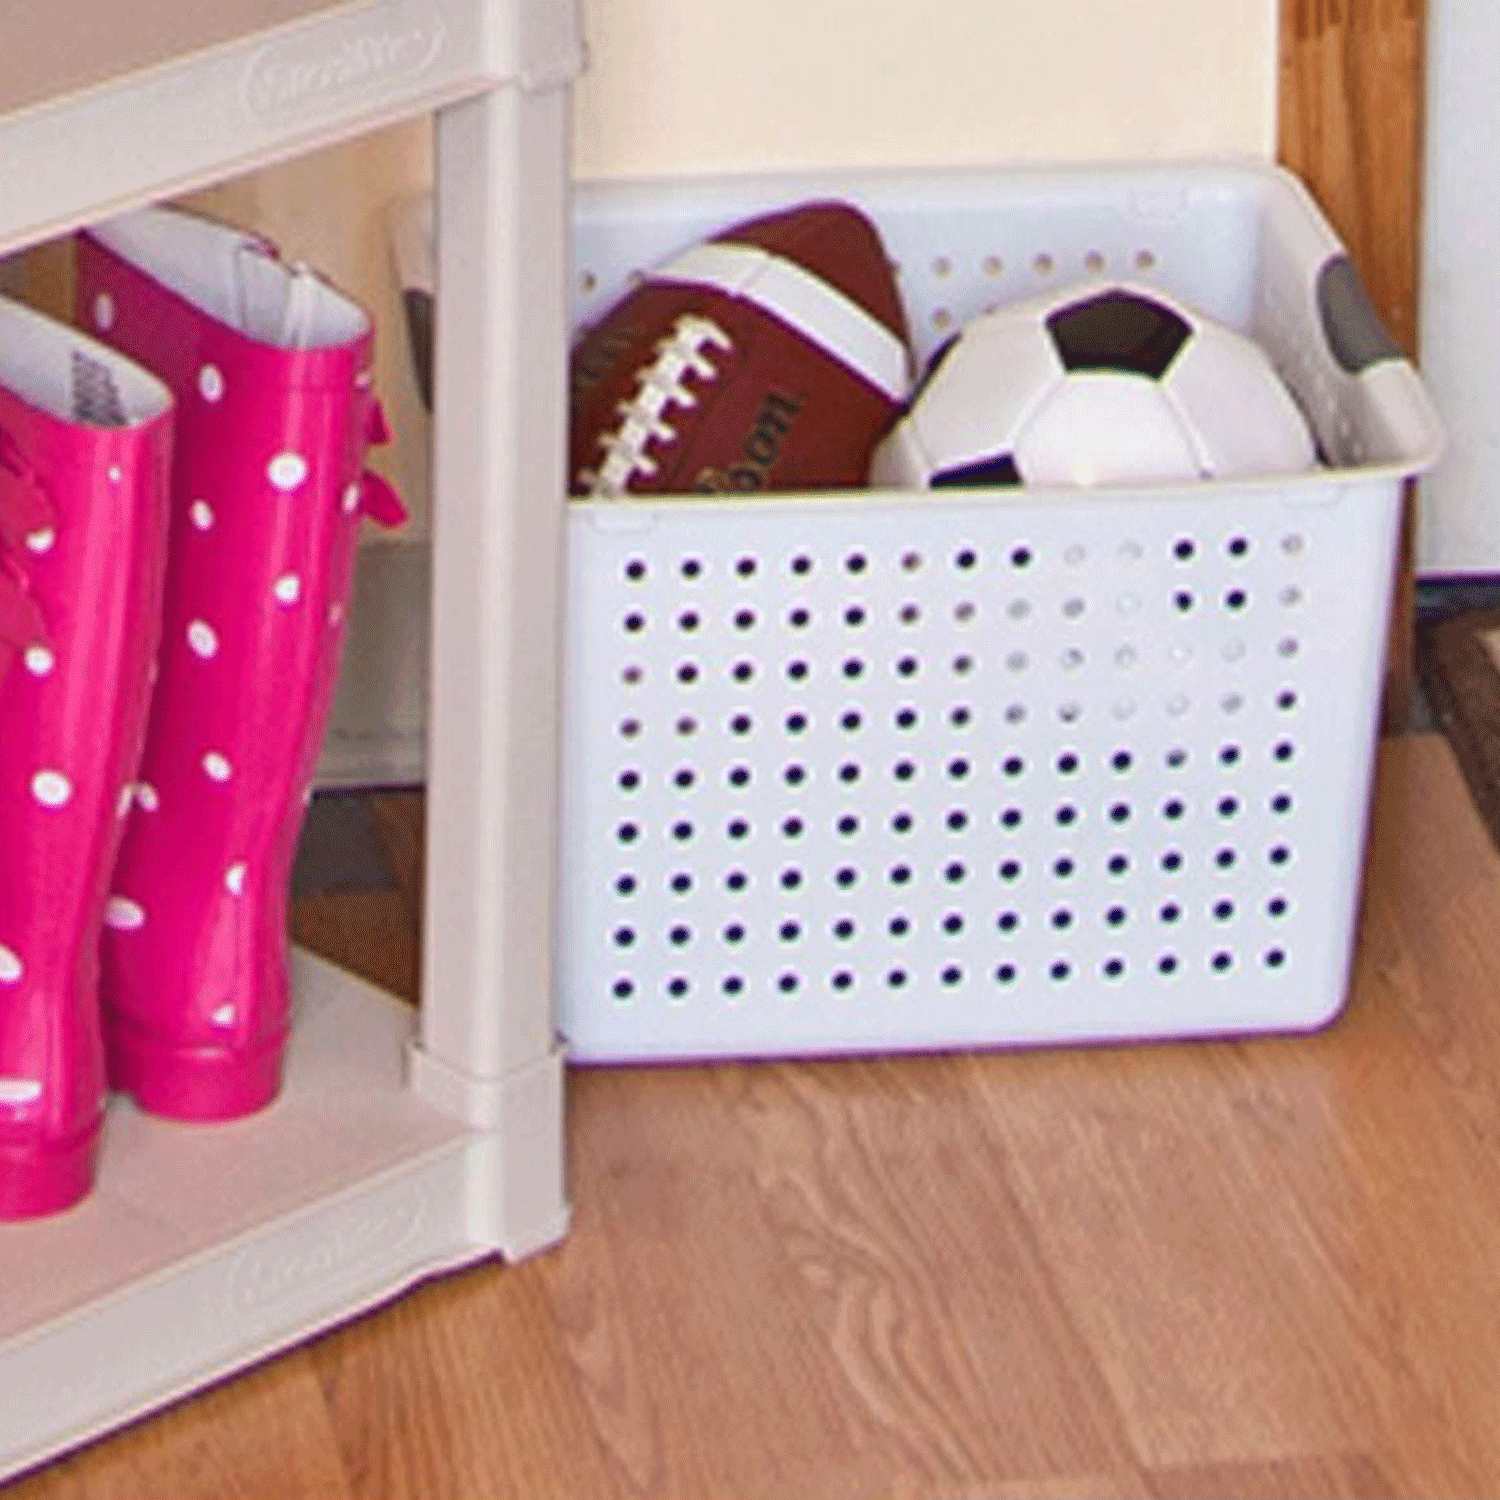 Sterilite Deep Ultra Plastic Kitchen Laundry Storage Organizer Baskets, White - 6 pack